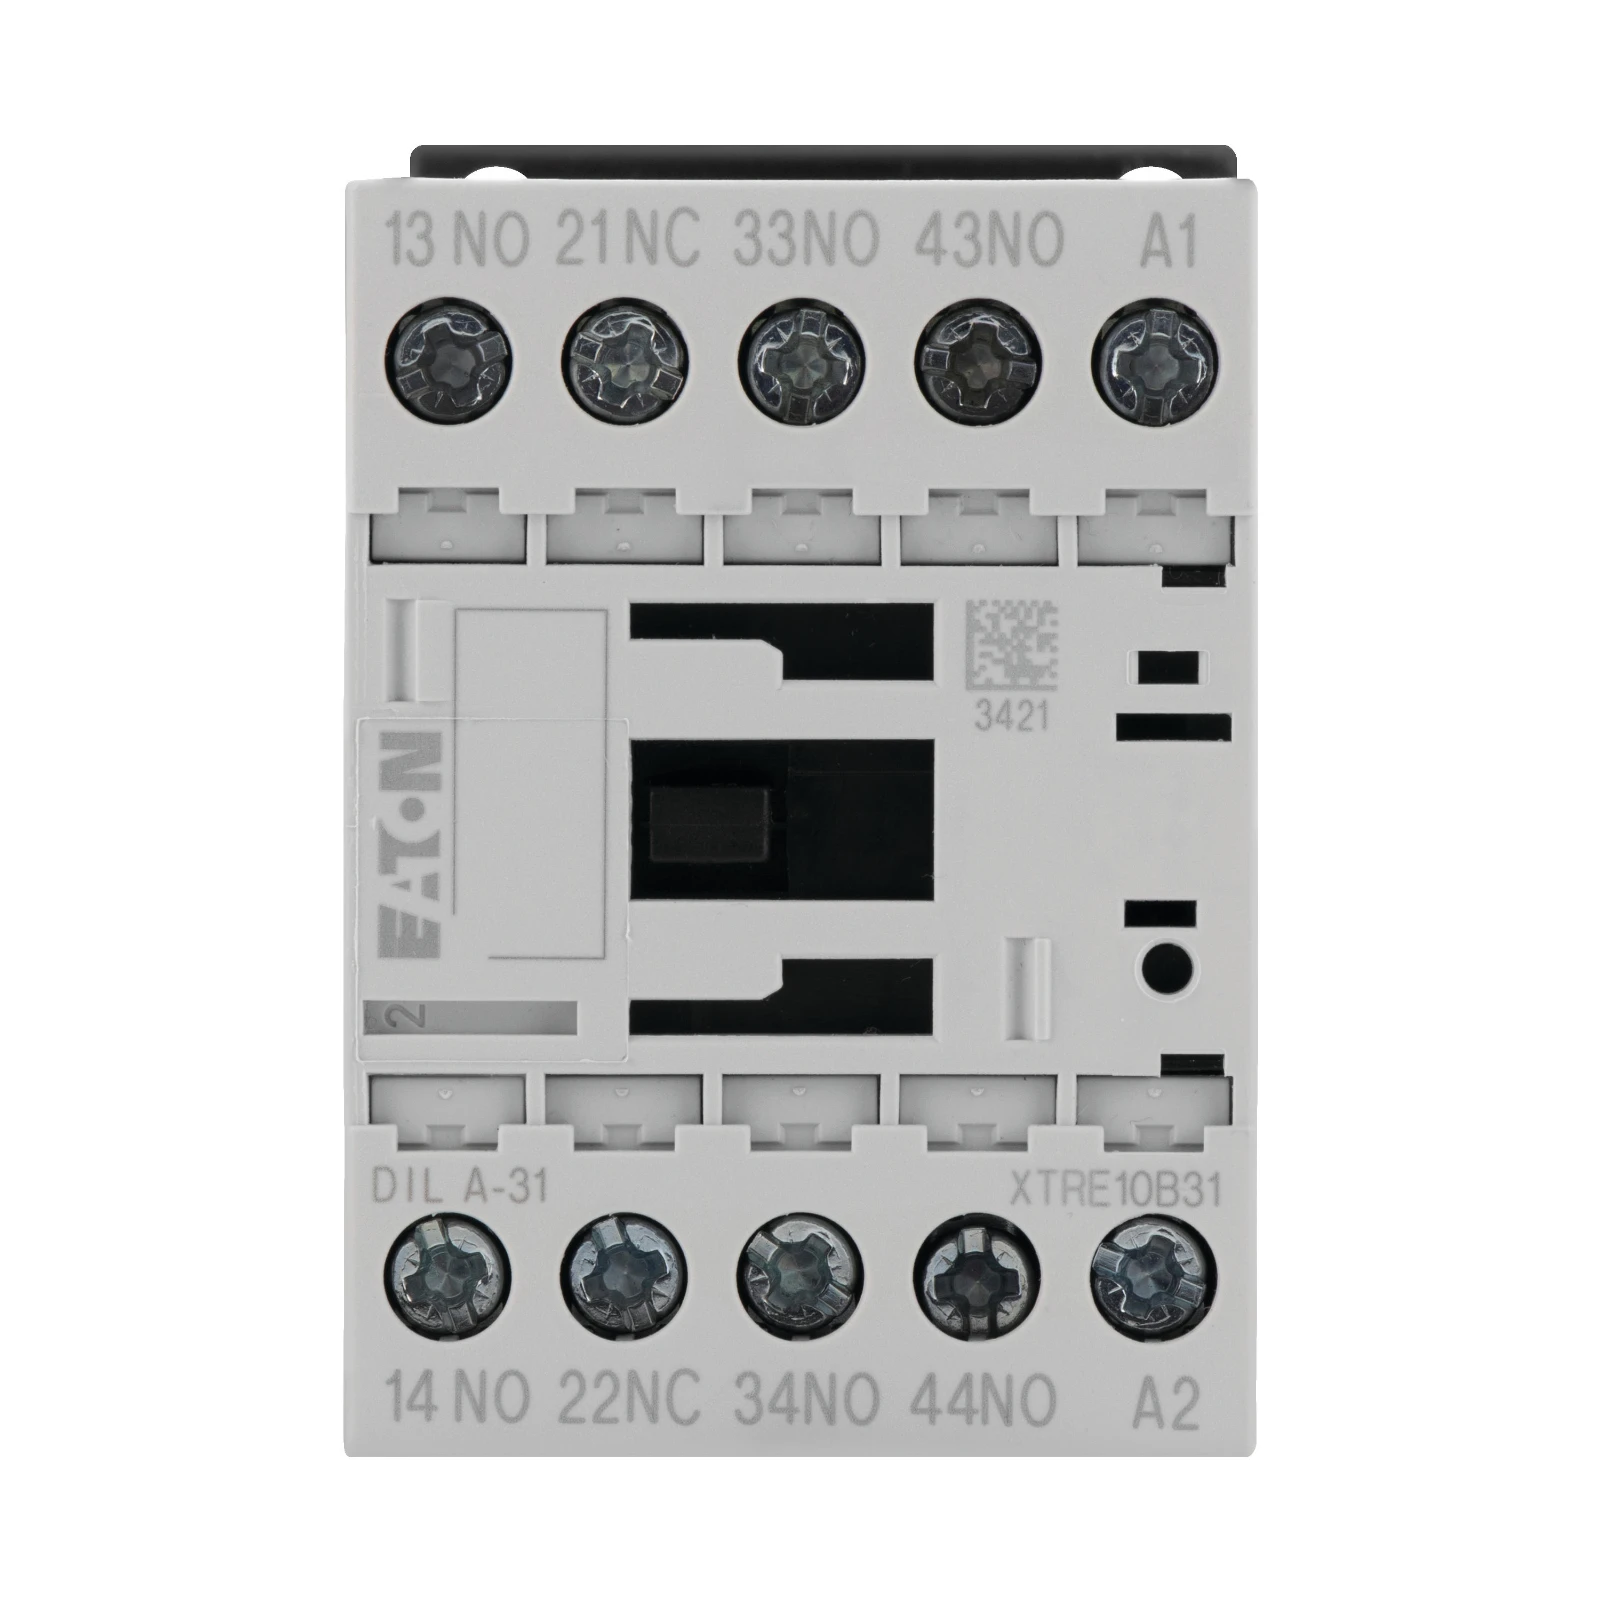 2065502 - Eaton DILA-31(48VDC)